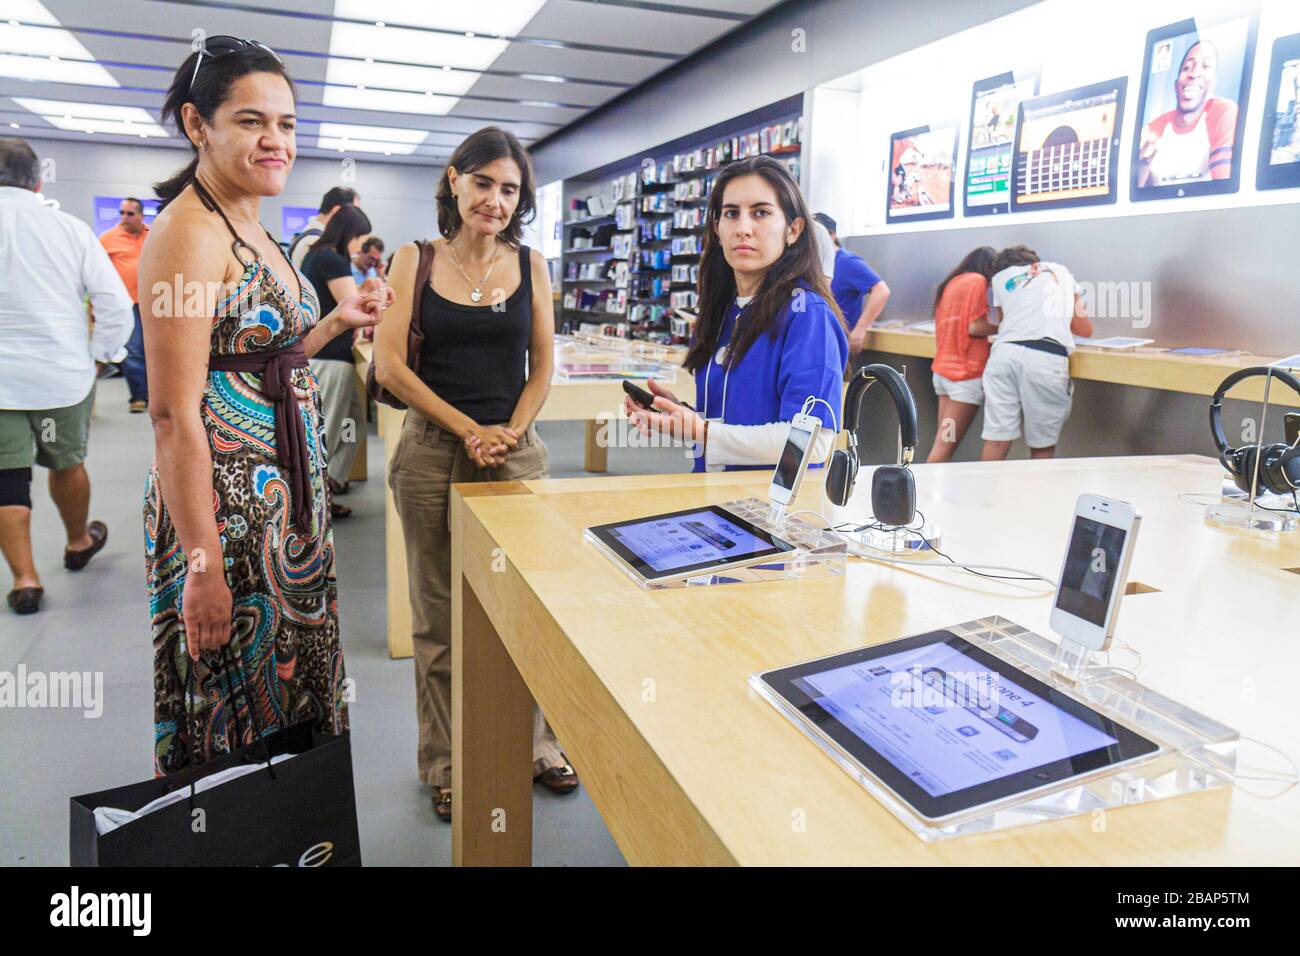 Apple Retail Store - Dadeland  Apple store interior, Apple store, Apple  retail store